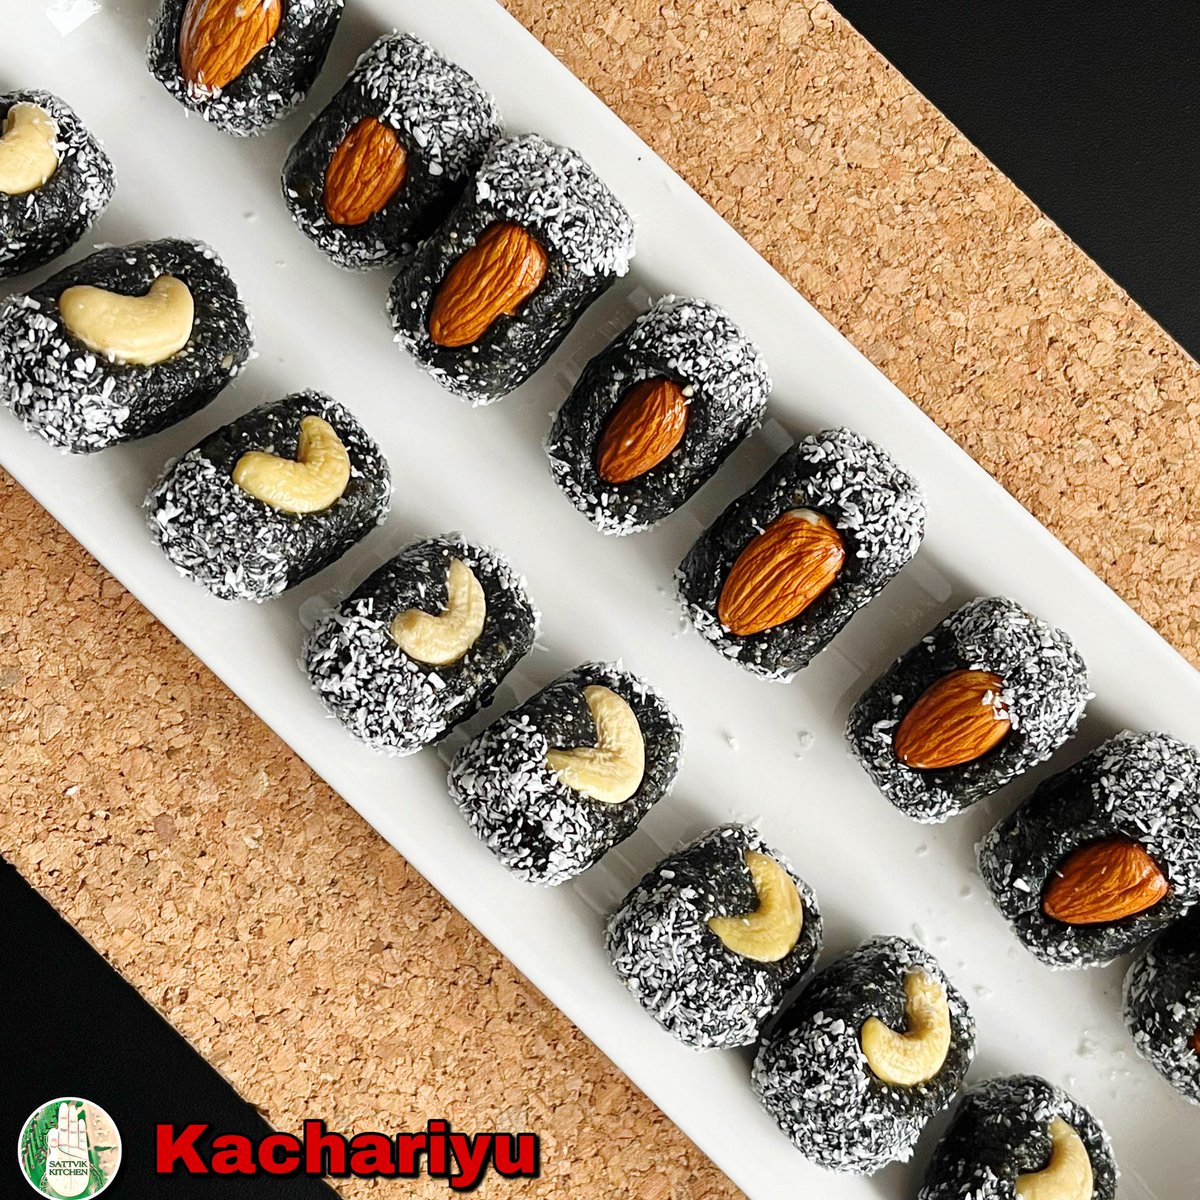 Kachariyu Recipe youtu.be/YhpKv-4B_TQ 👌🏻😊 Without sugar 5 mins quick sweet #kachariyu #healthysweets #quicksweets #Ekadashi #vratrecipe